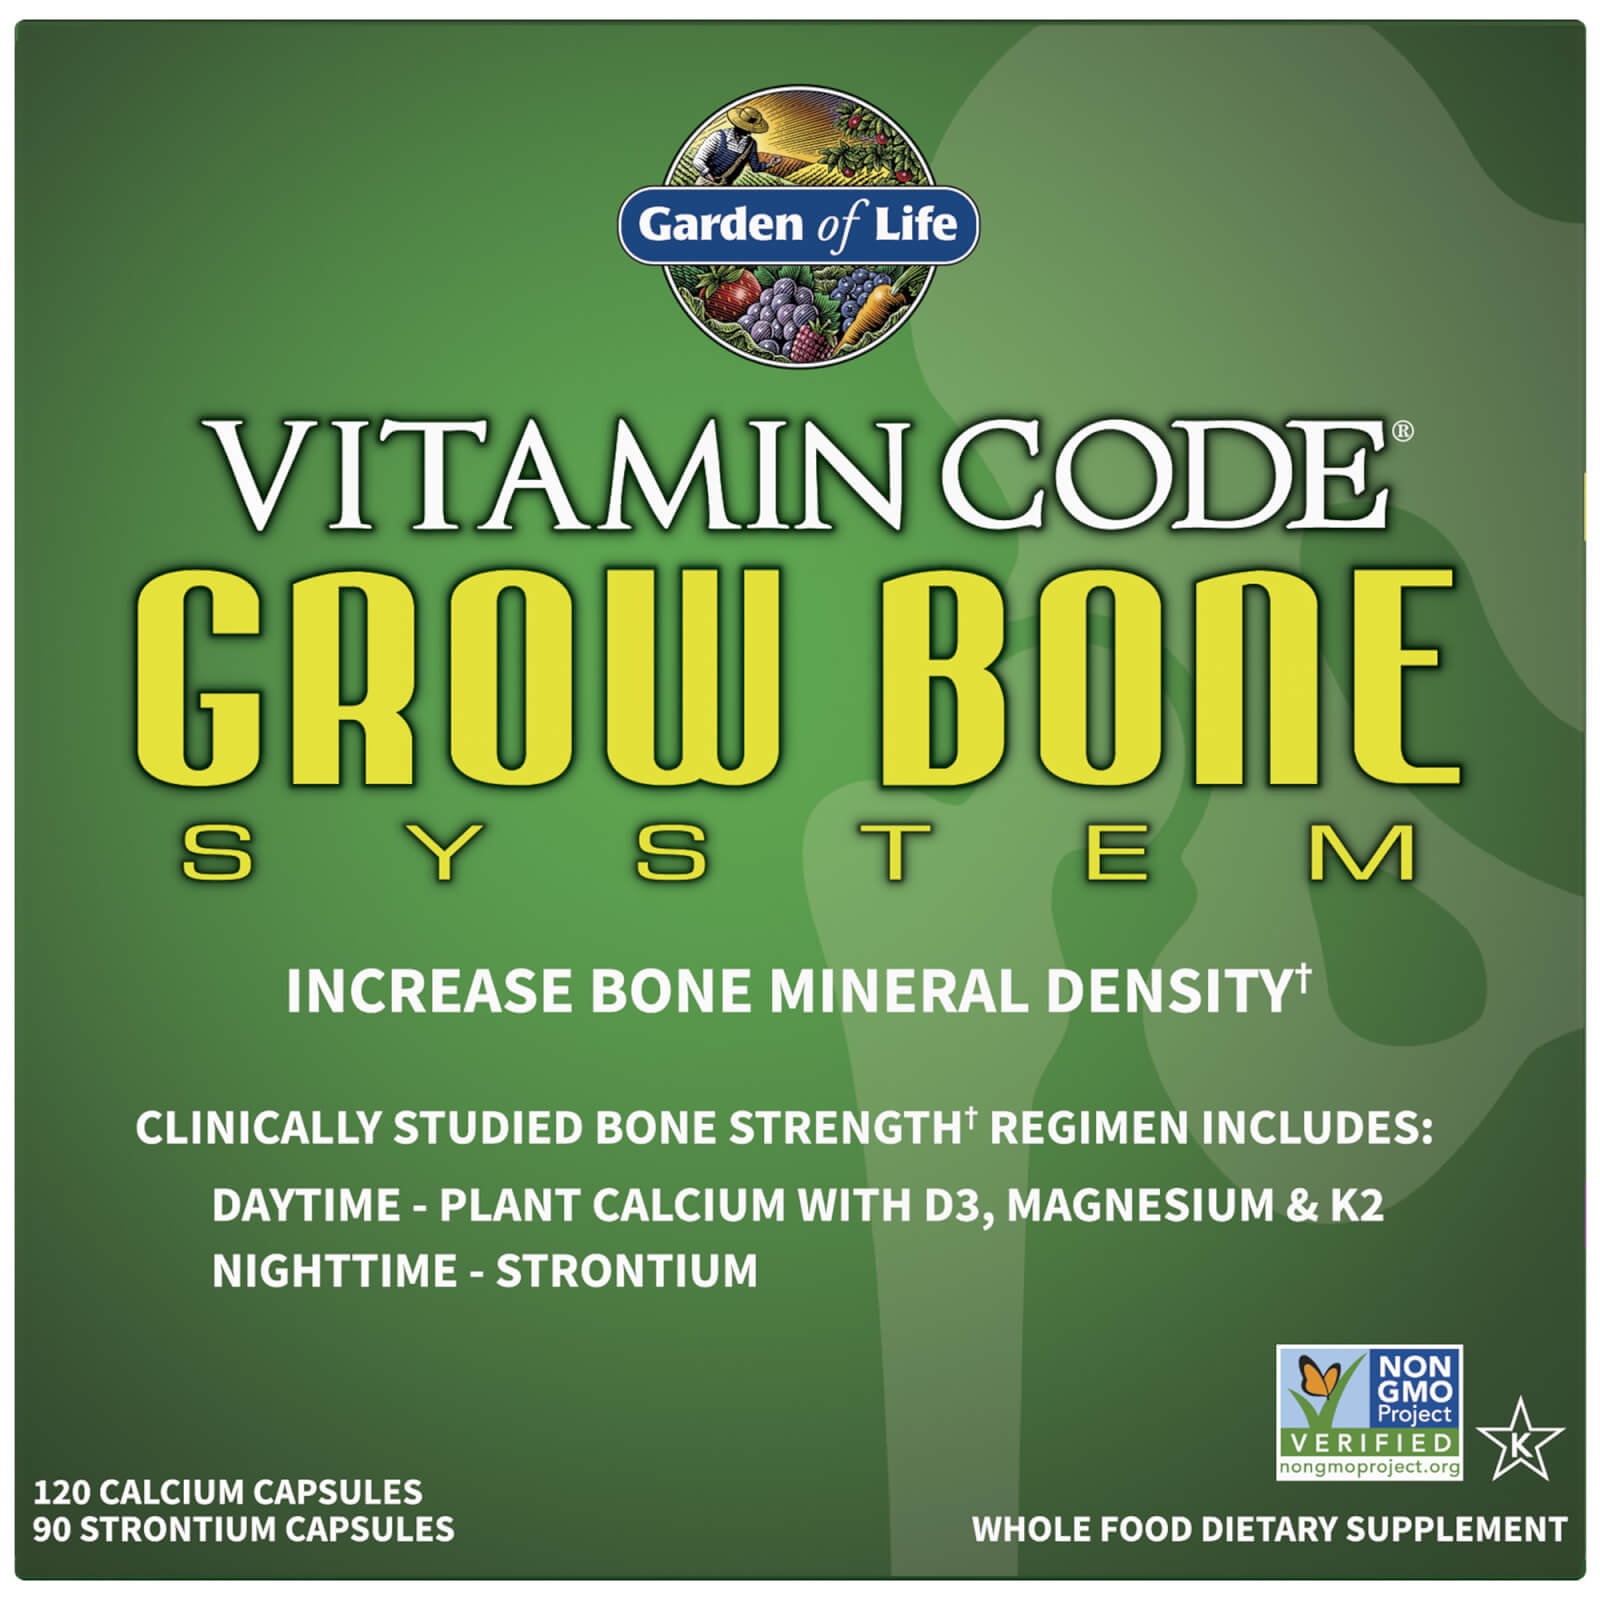 Garden of Life Vitamin Code Bone 30-Day Kit